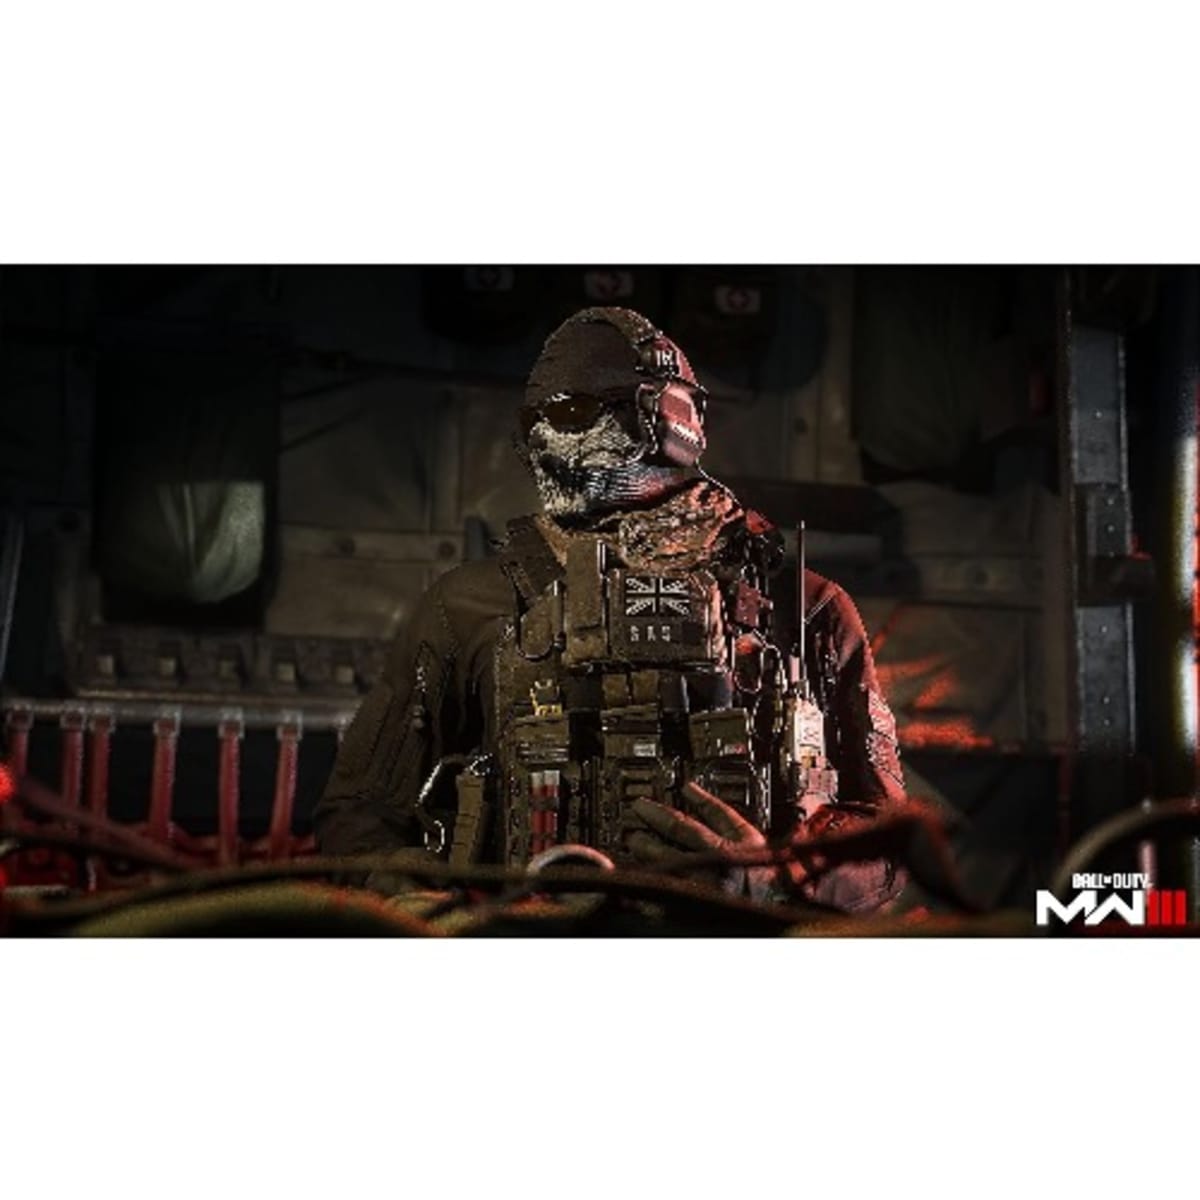 Juego Call Of Duty Modern Warfare III PS4 Latam I Oechsle - Oechsle